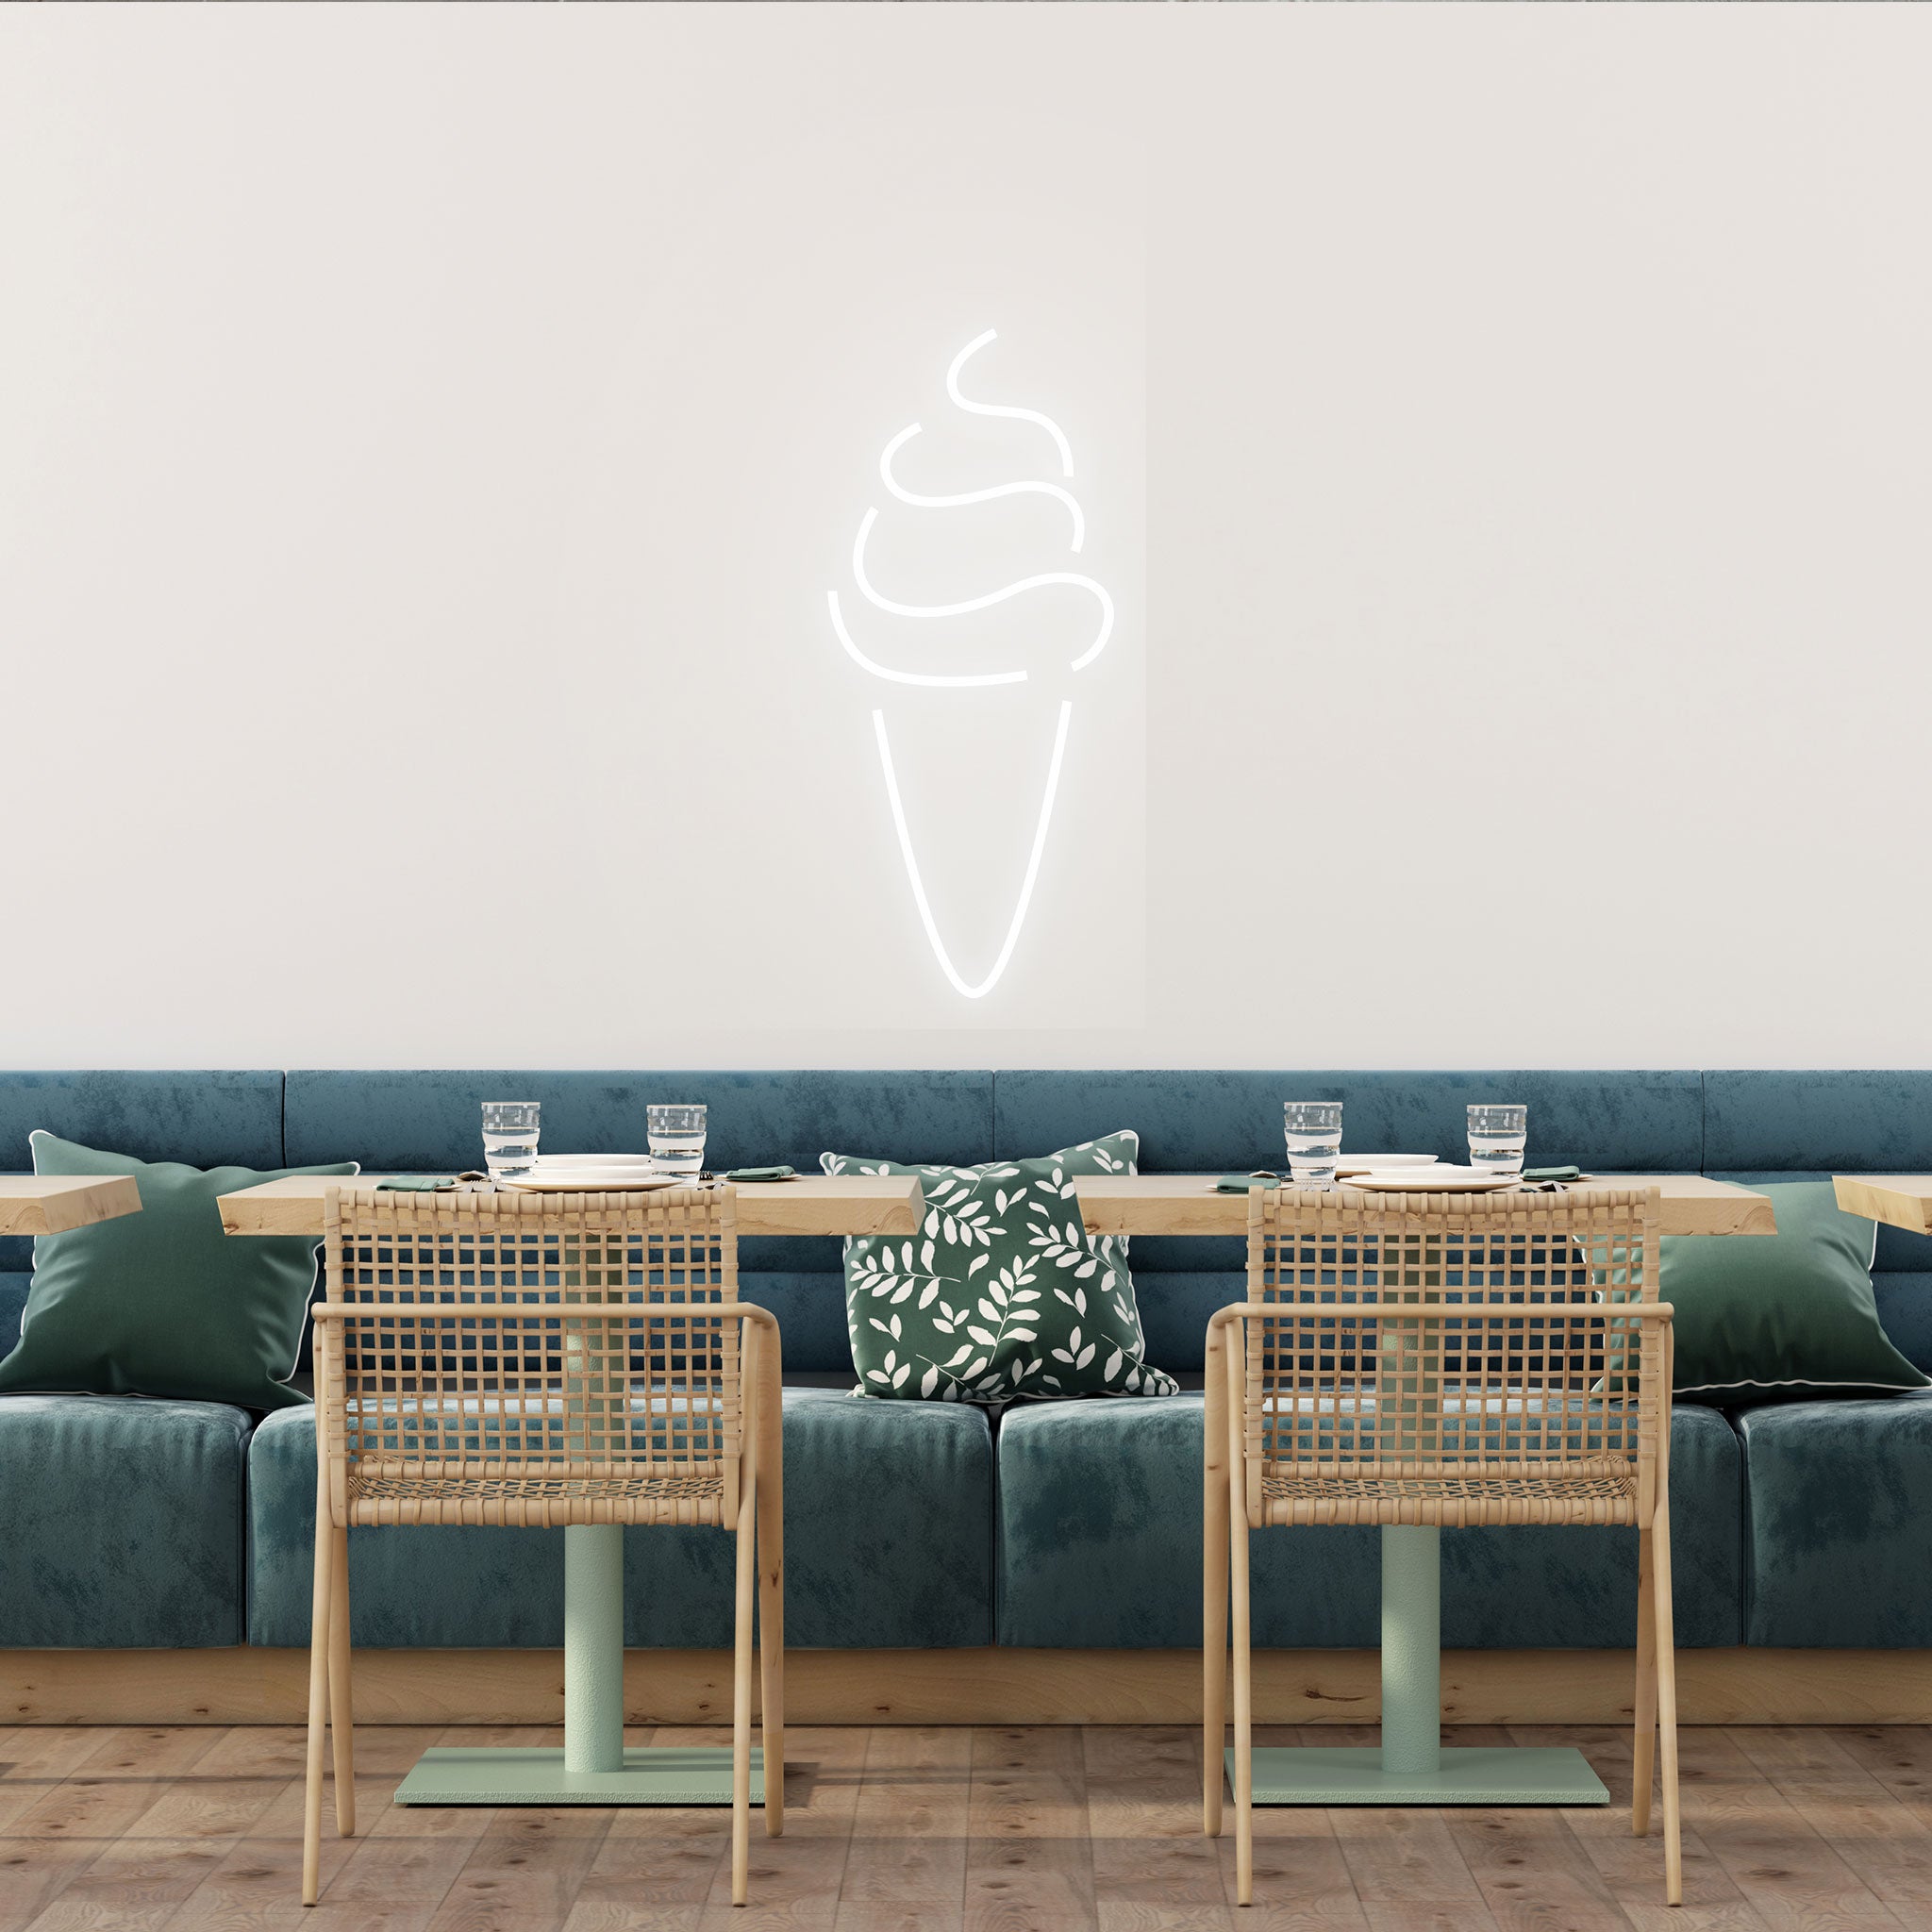 Ice Cream Swirl - Neon Sign - Ice Cream Bar / Dessert Bar